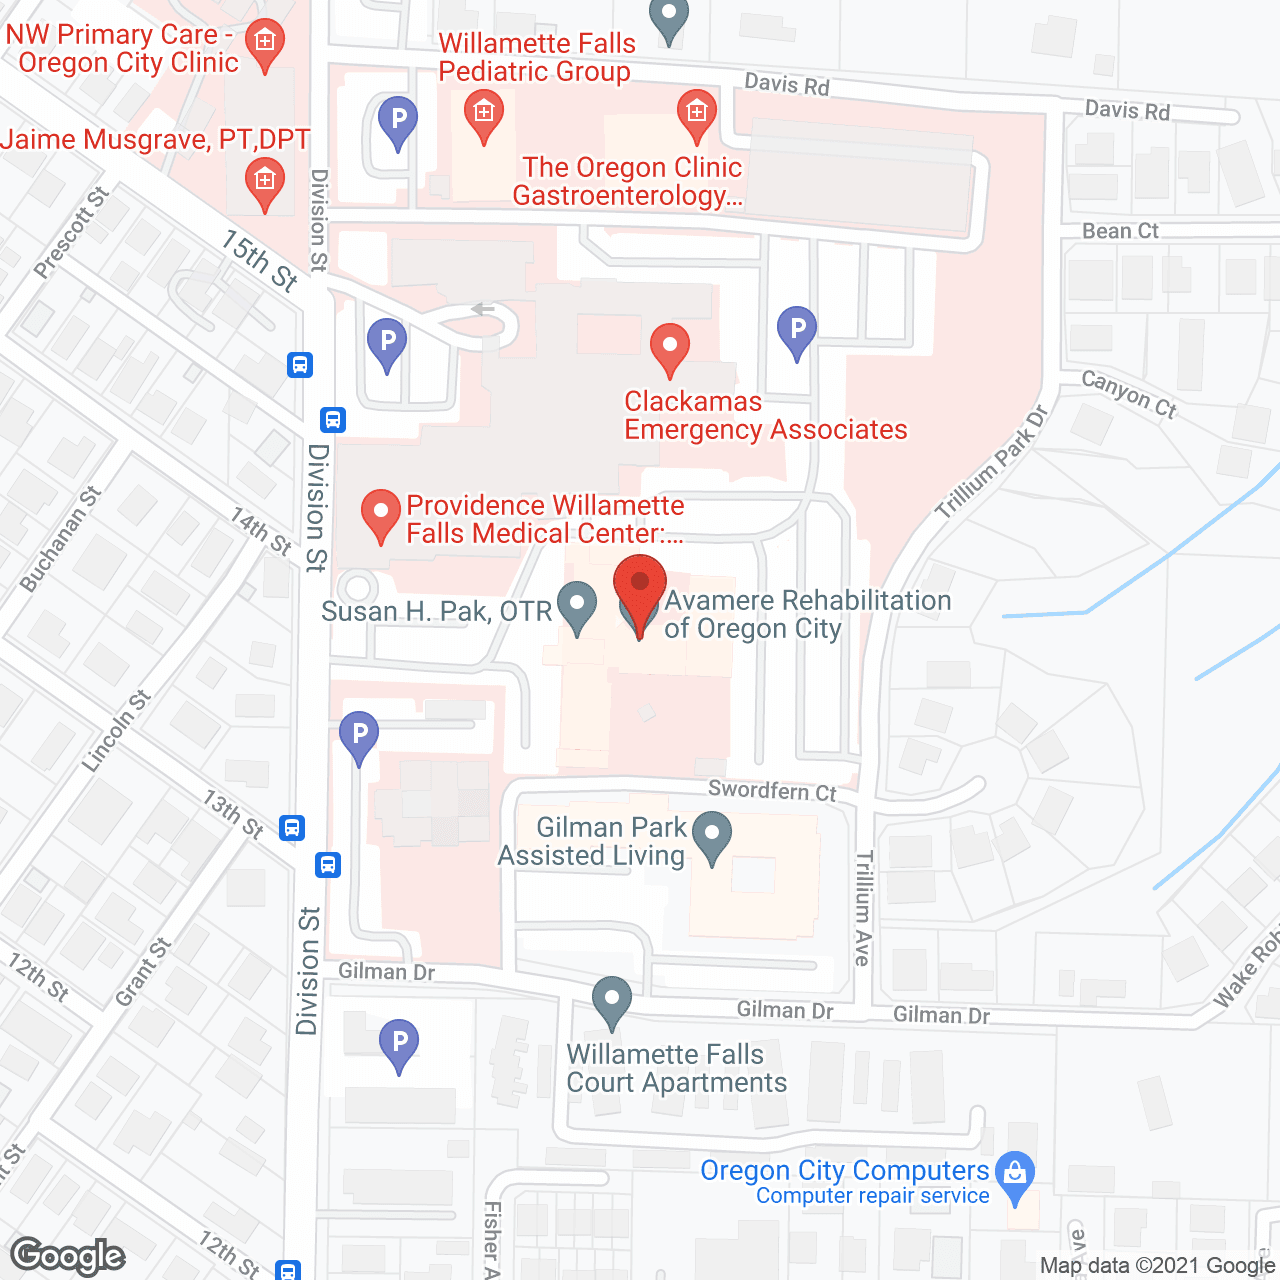 Avamere Rehabilitation of Oregon City in google map